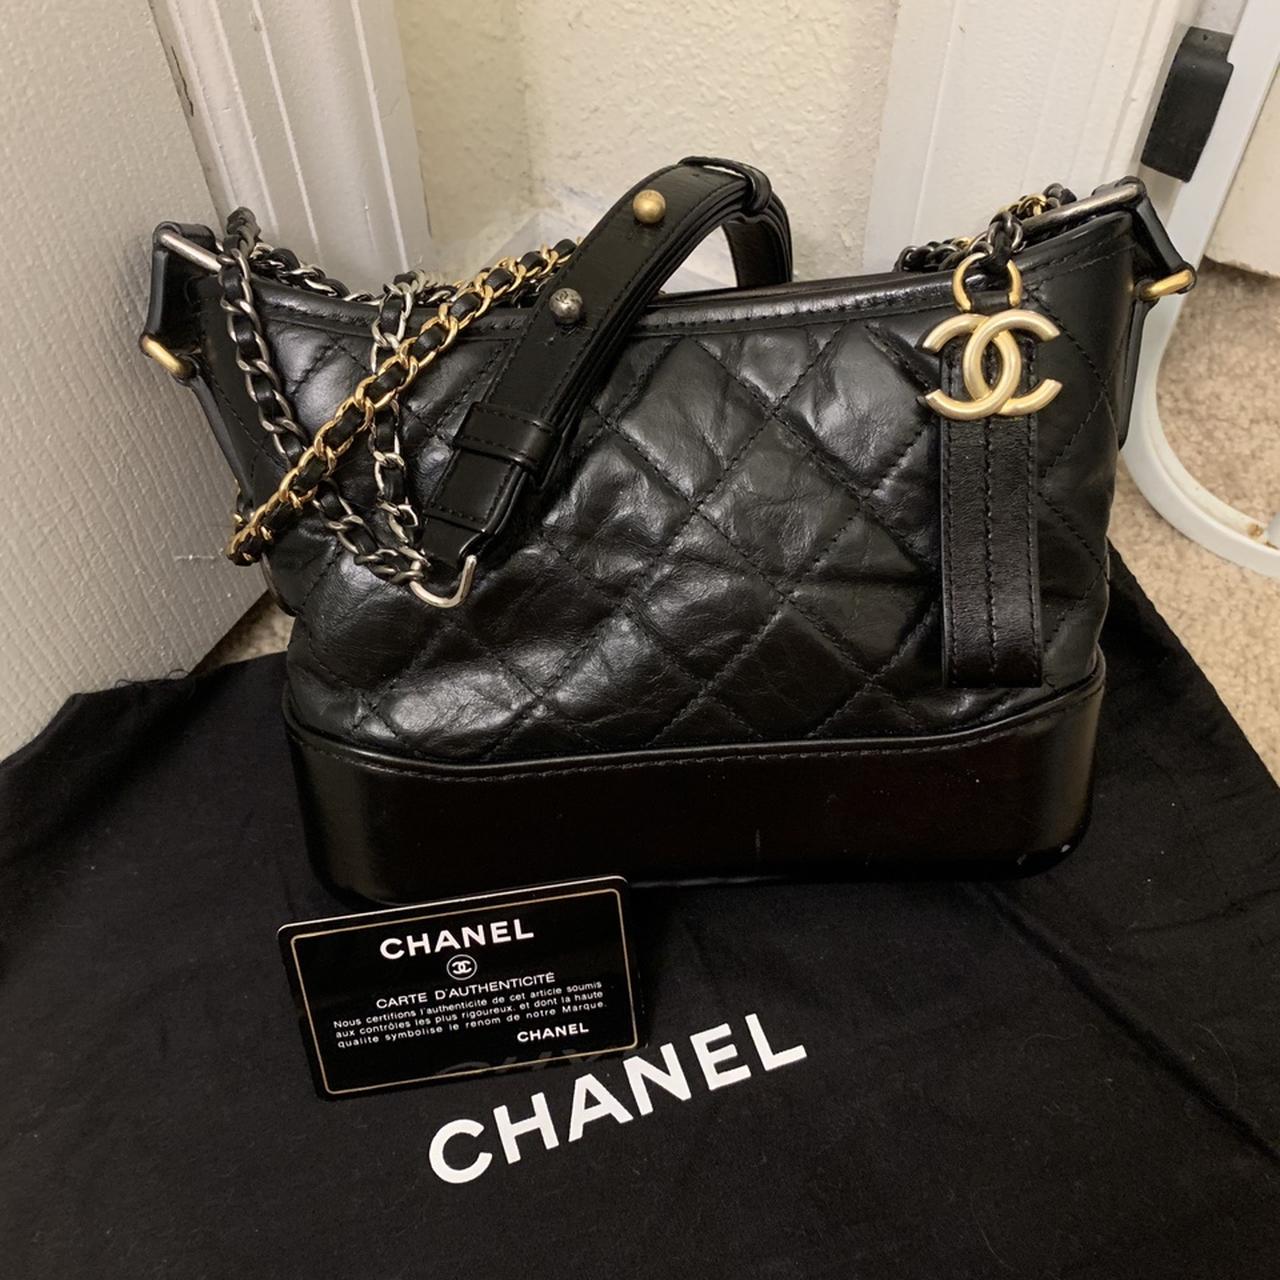 Chanel Dust Bag Black Cotton Bag Storage Bag Made in